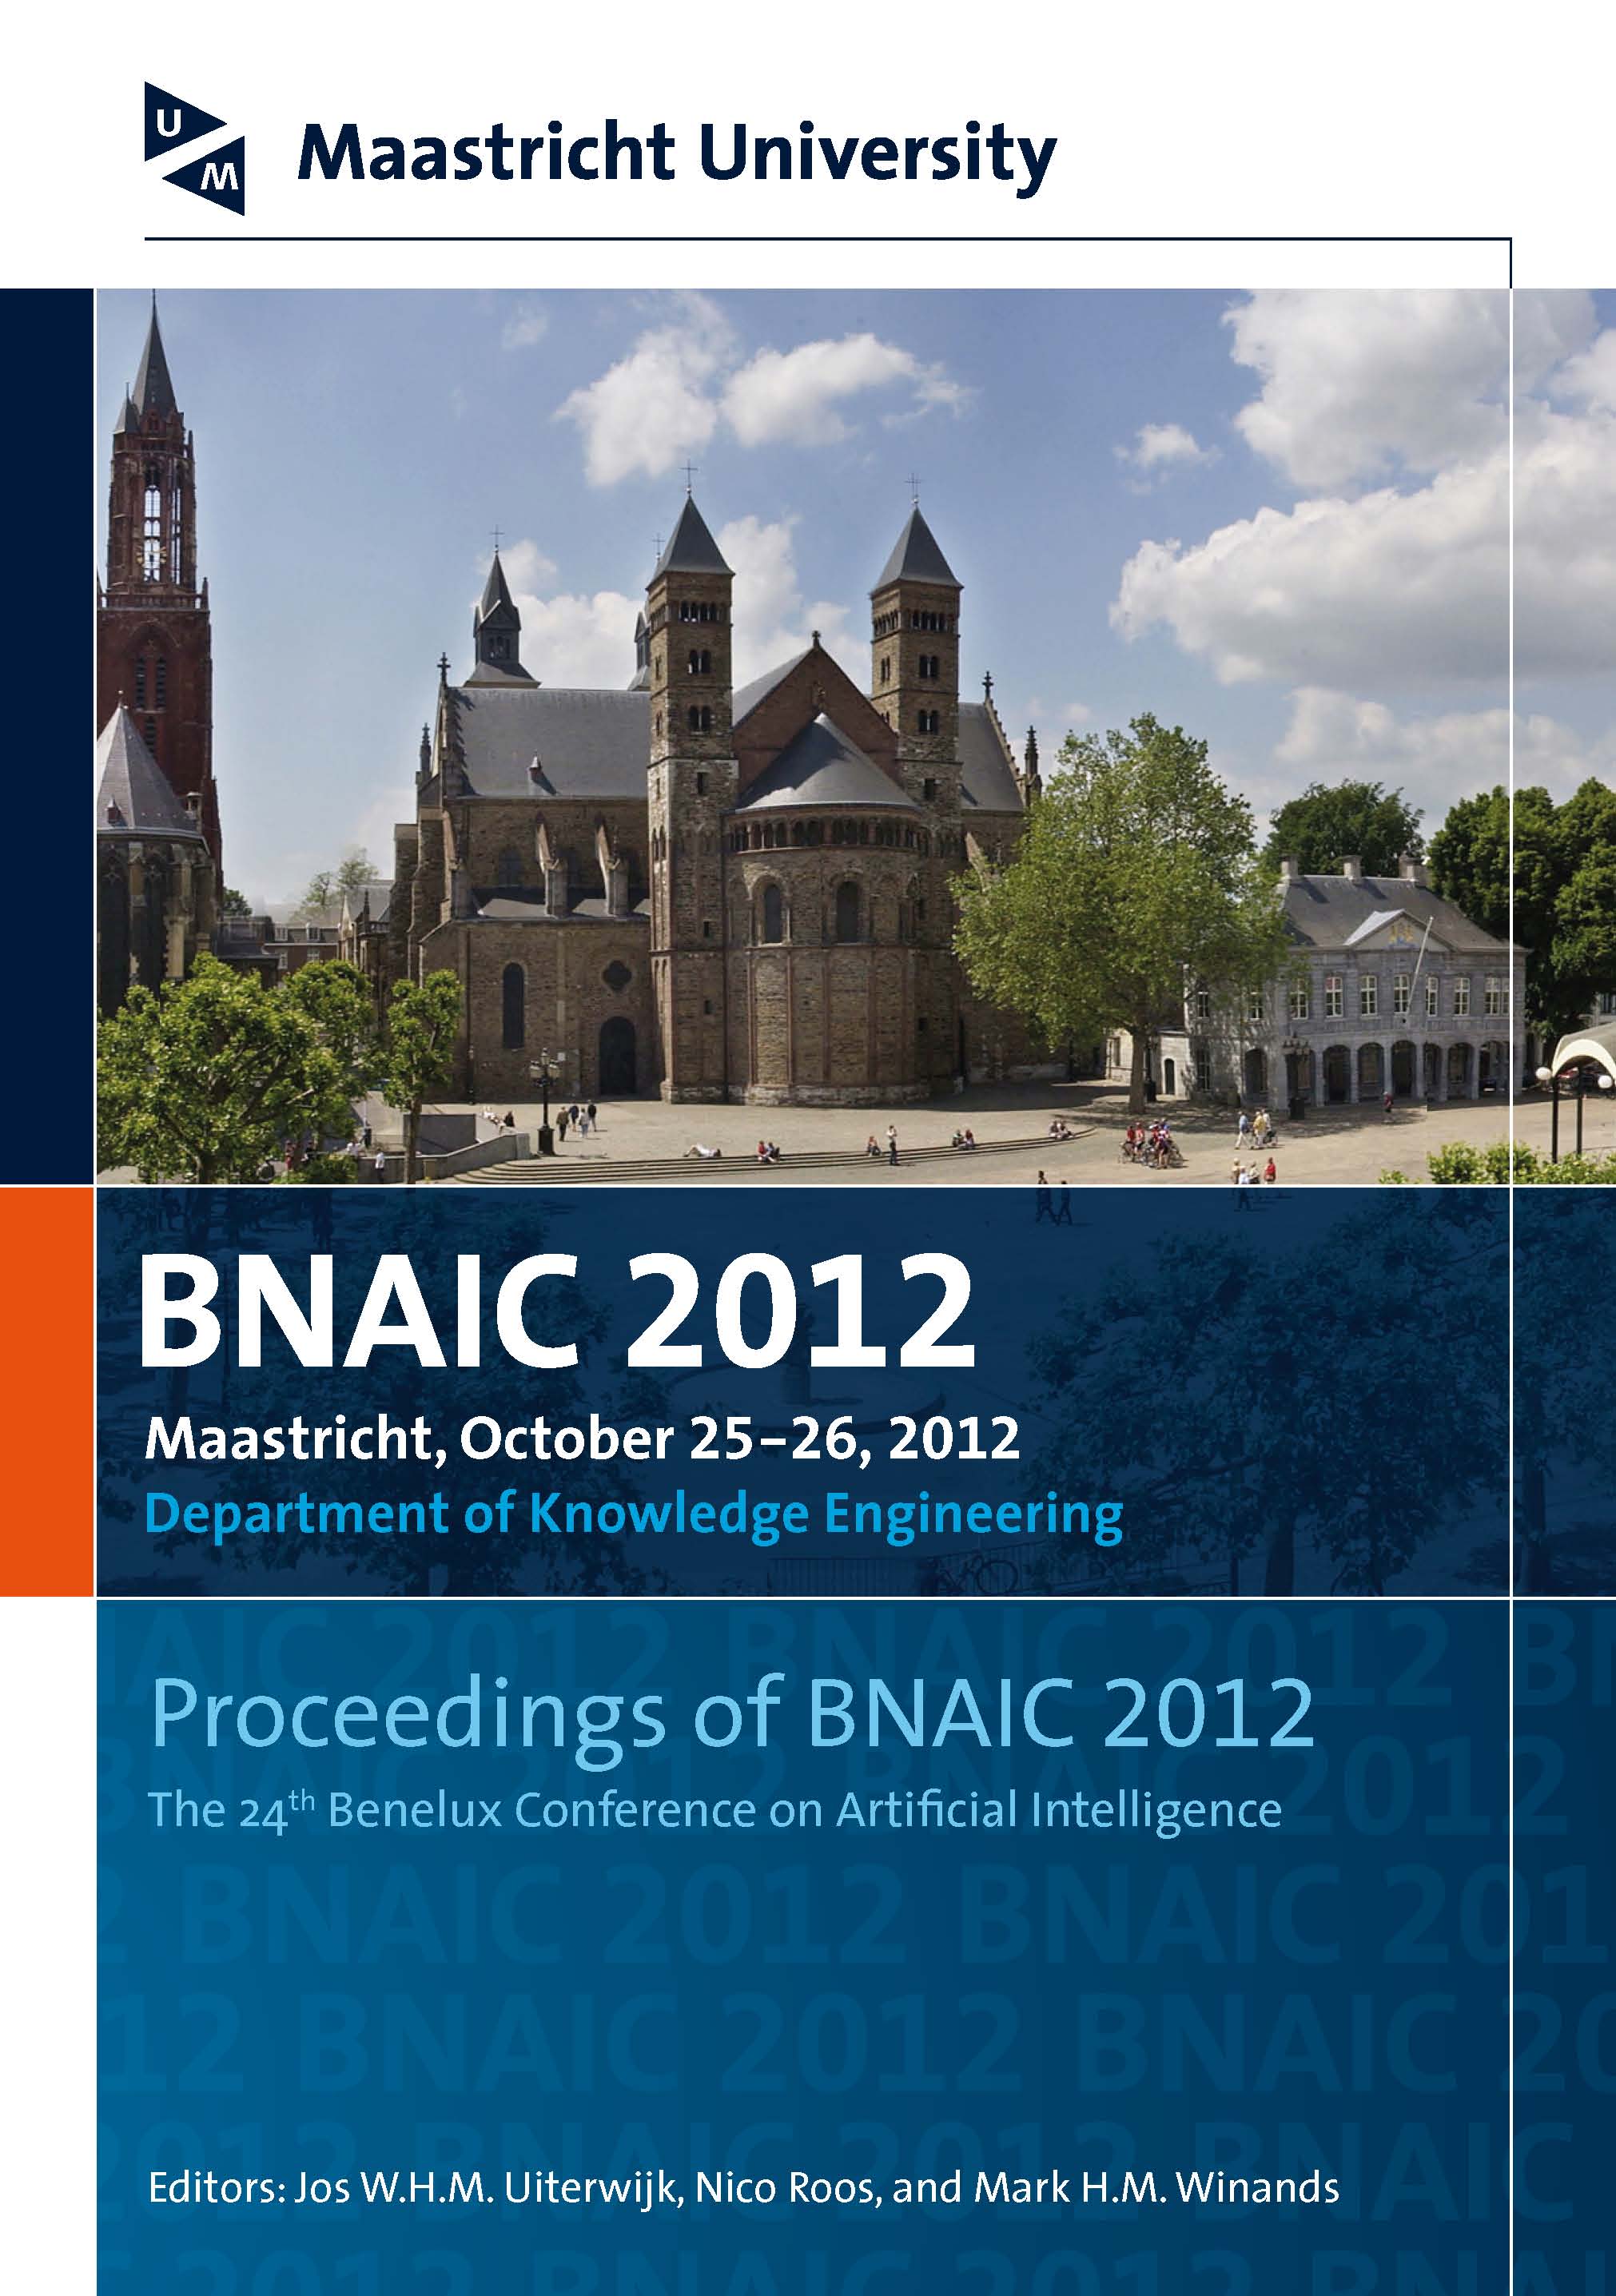 The Online BNAIC 2012 proceedings